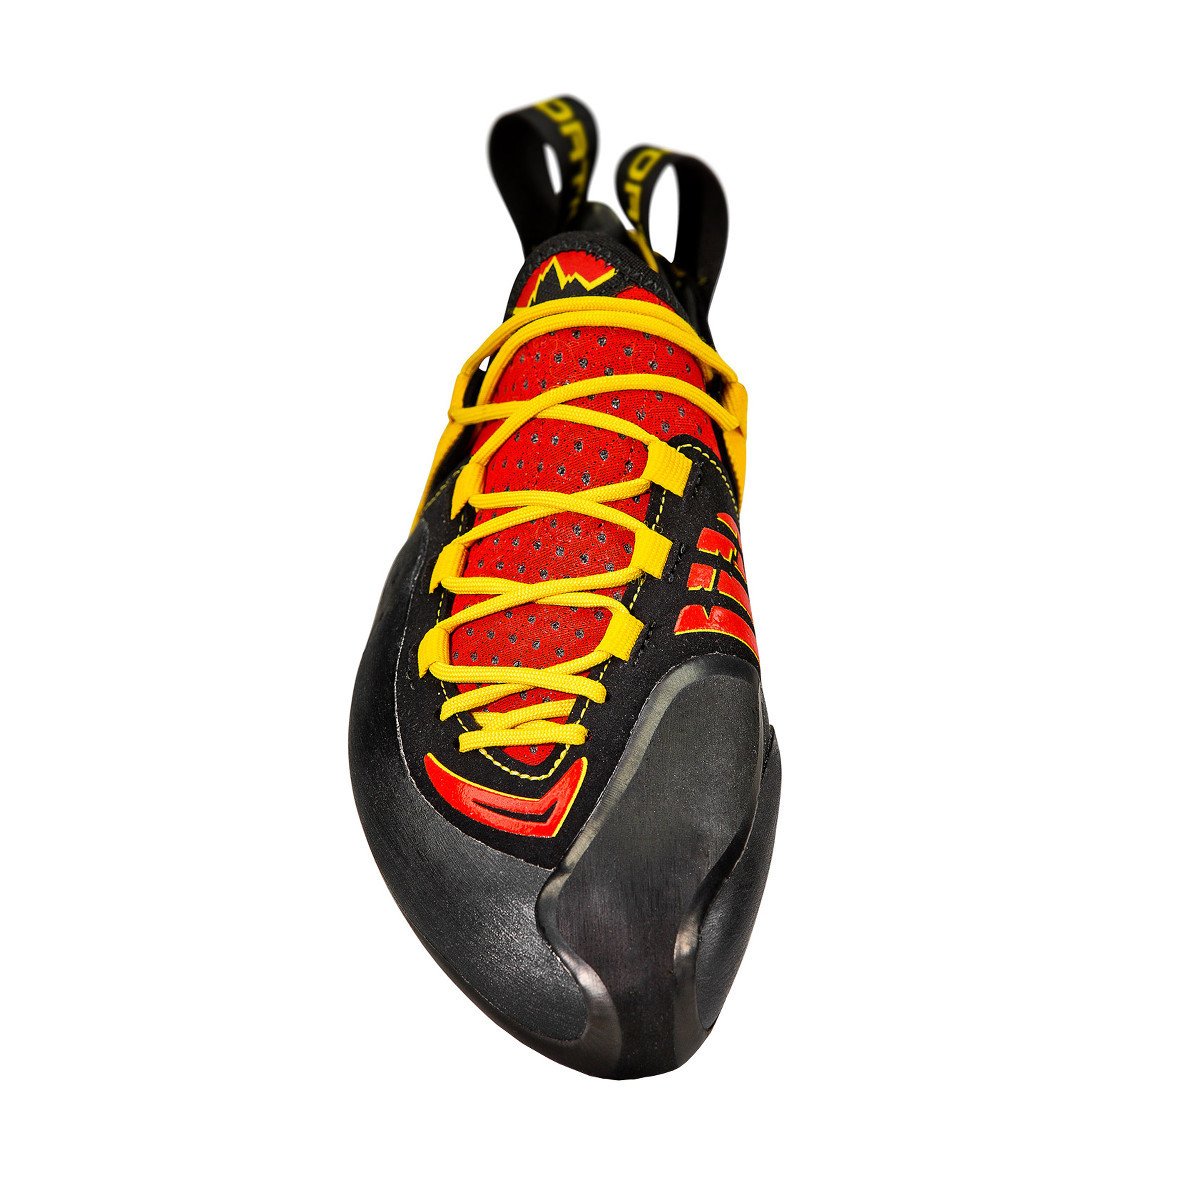 La Sportiva Genius climbing shoe, in black, red and yellow colours